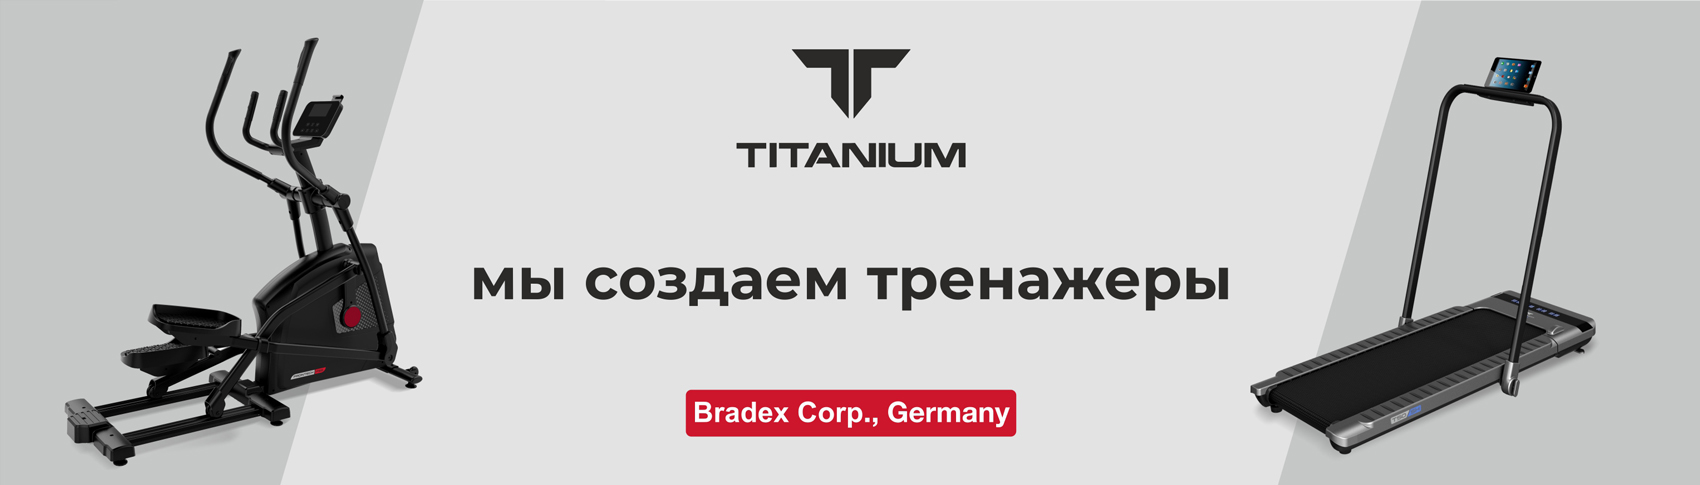 https://grandsportdn.com/catalog?search=titanium